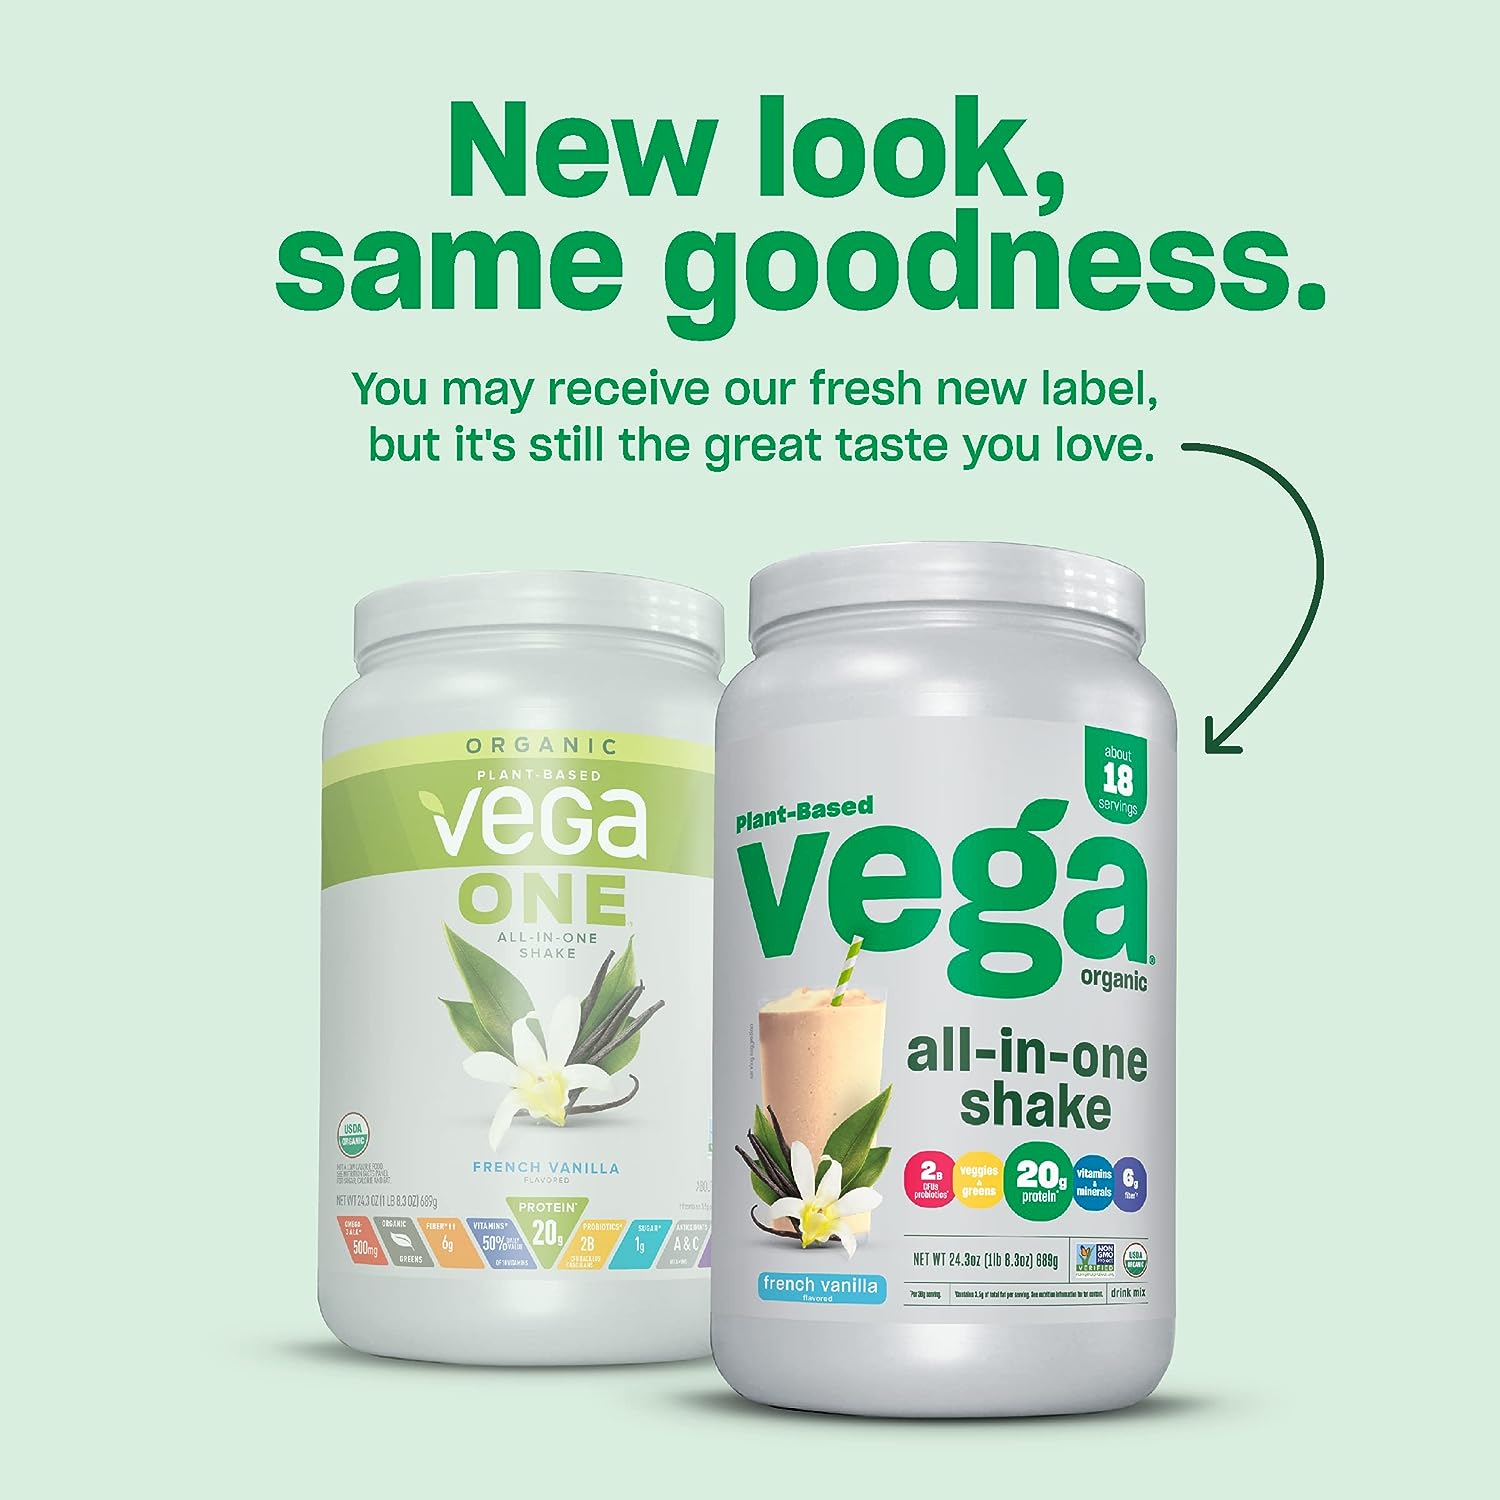 Vega Organic All-in-One Vegan Protein Powder, Plain Unsweetened - Supe